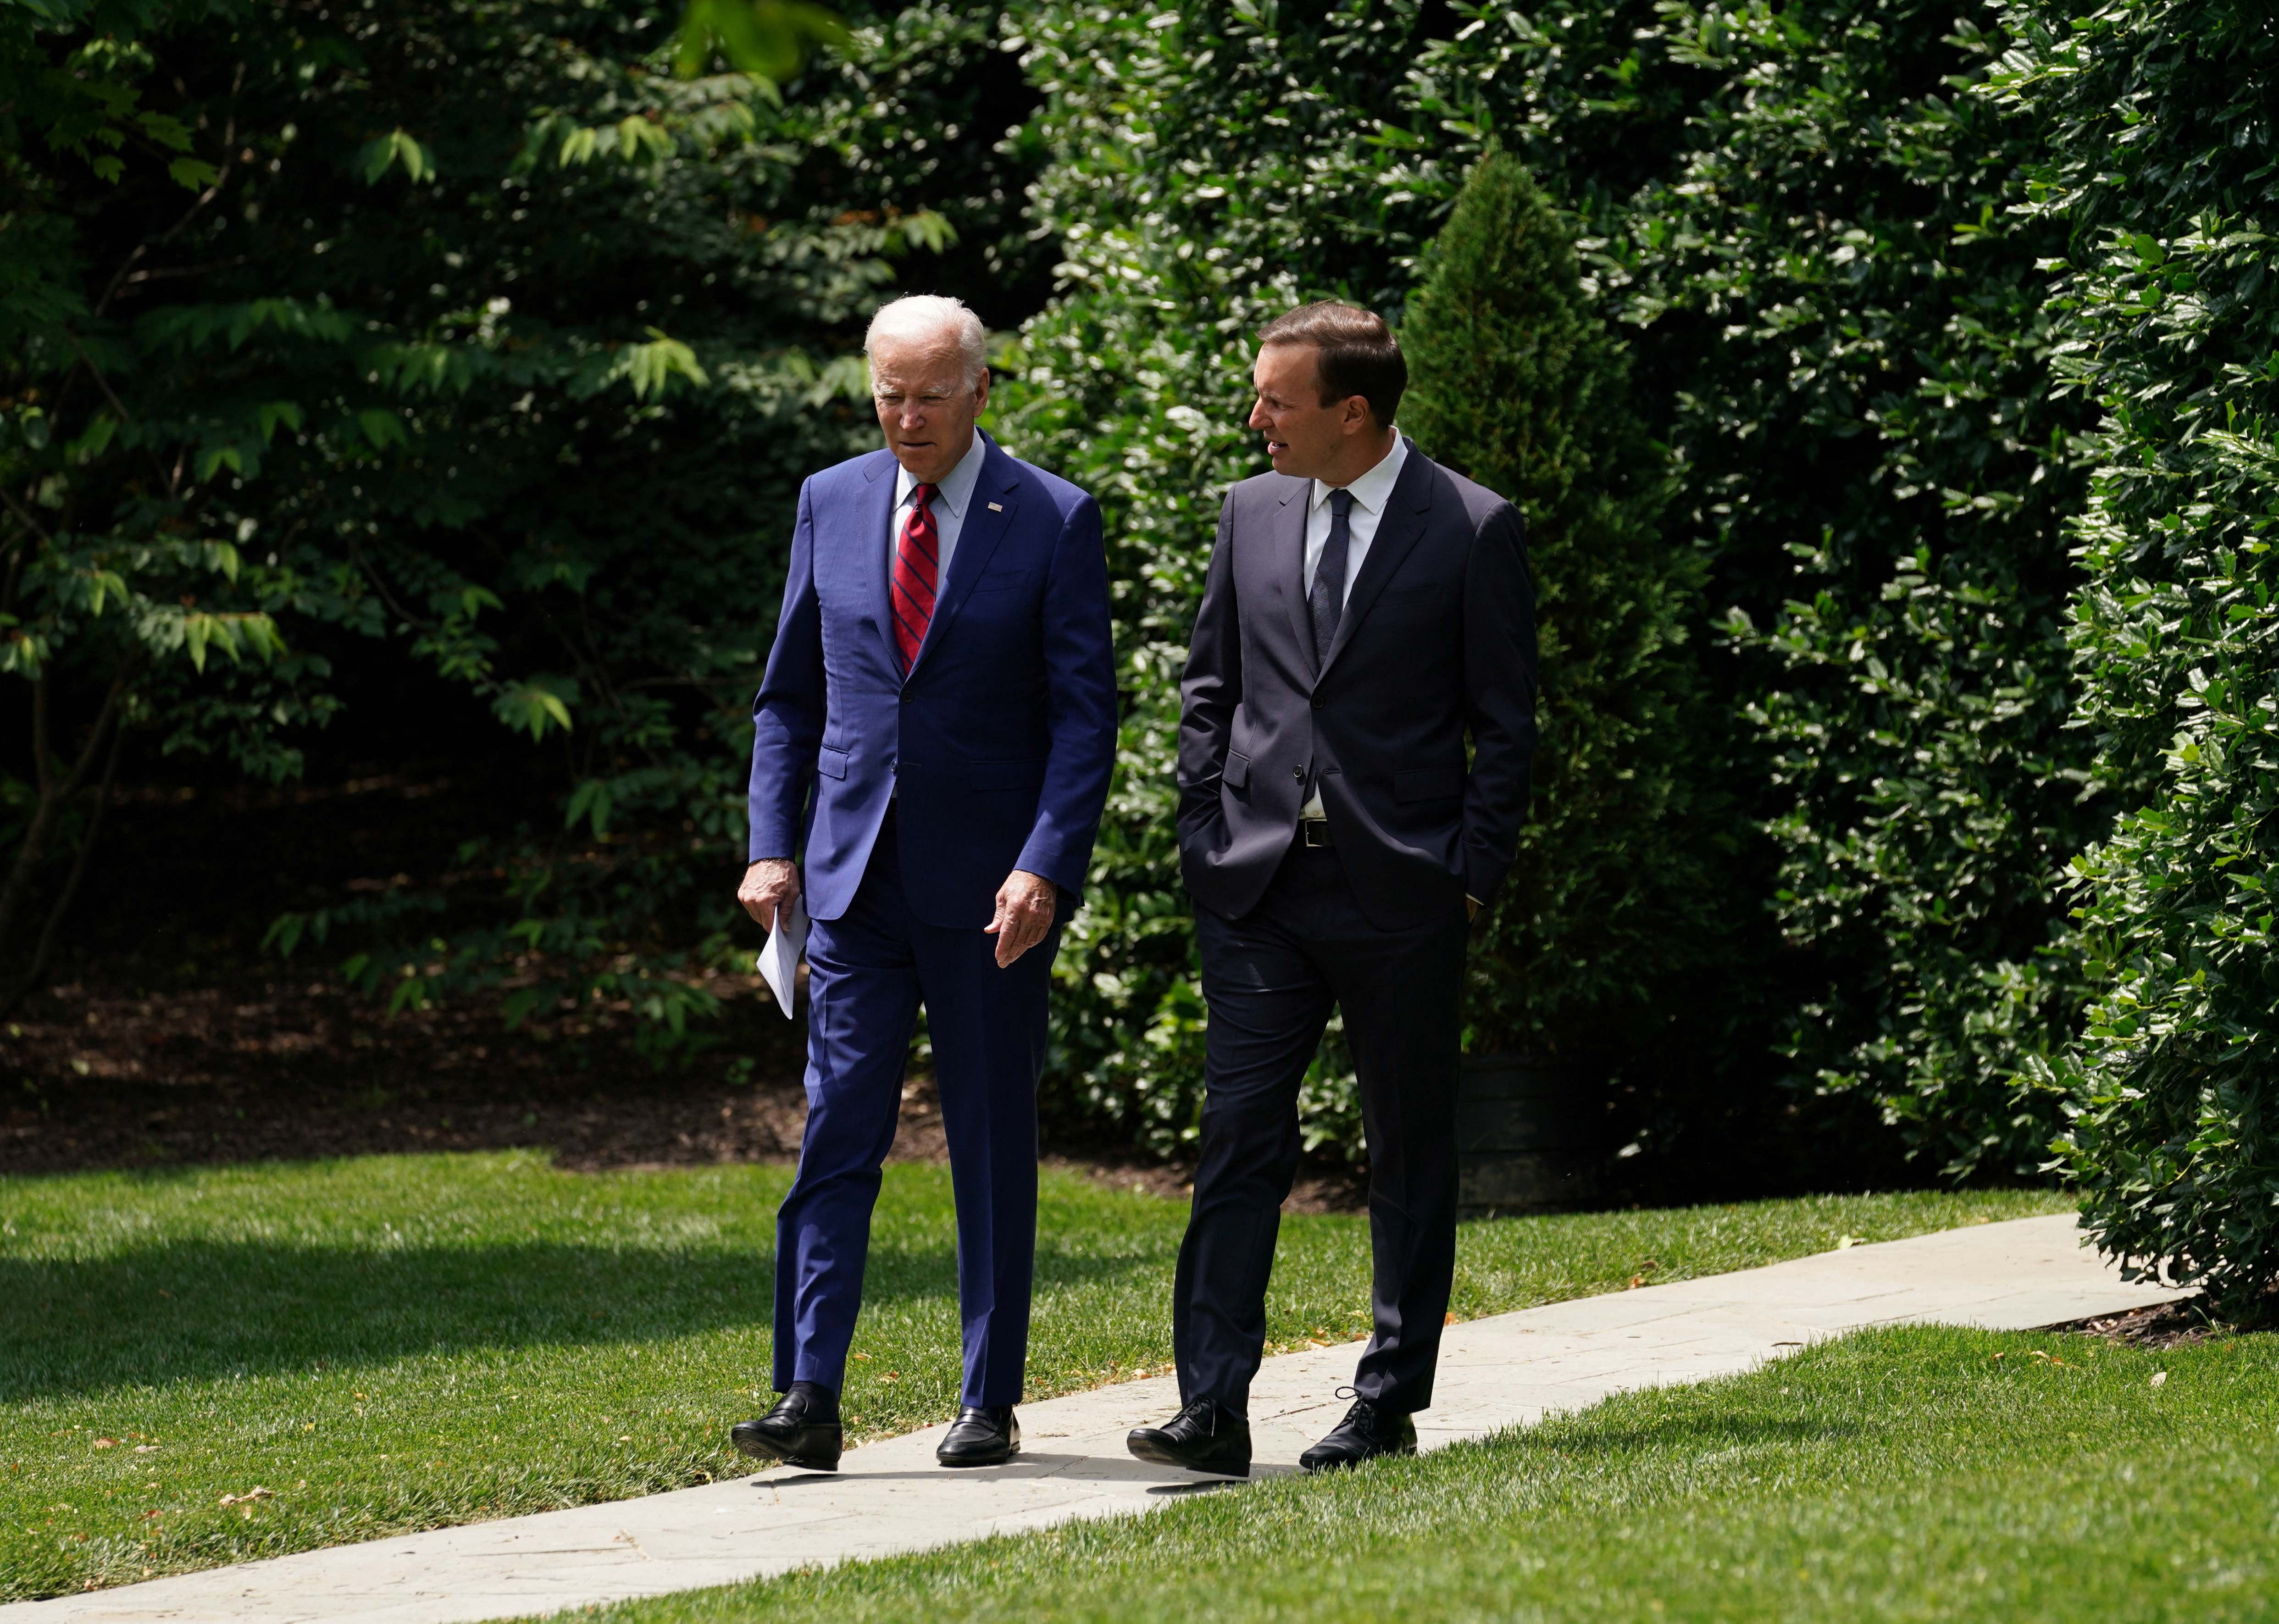 President Biden meets with Senator Chris Murphy to discuss gun reform at the White House in Washington